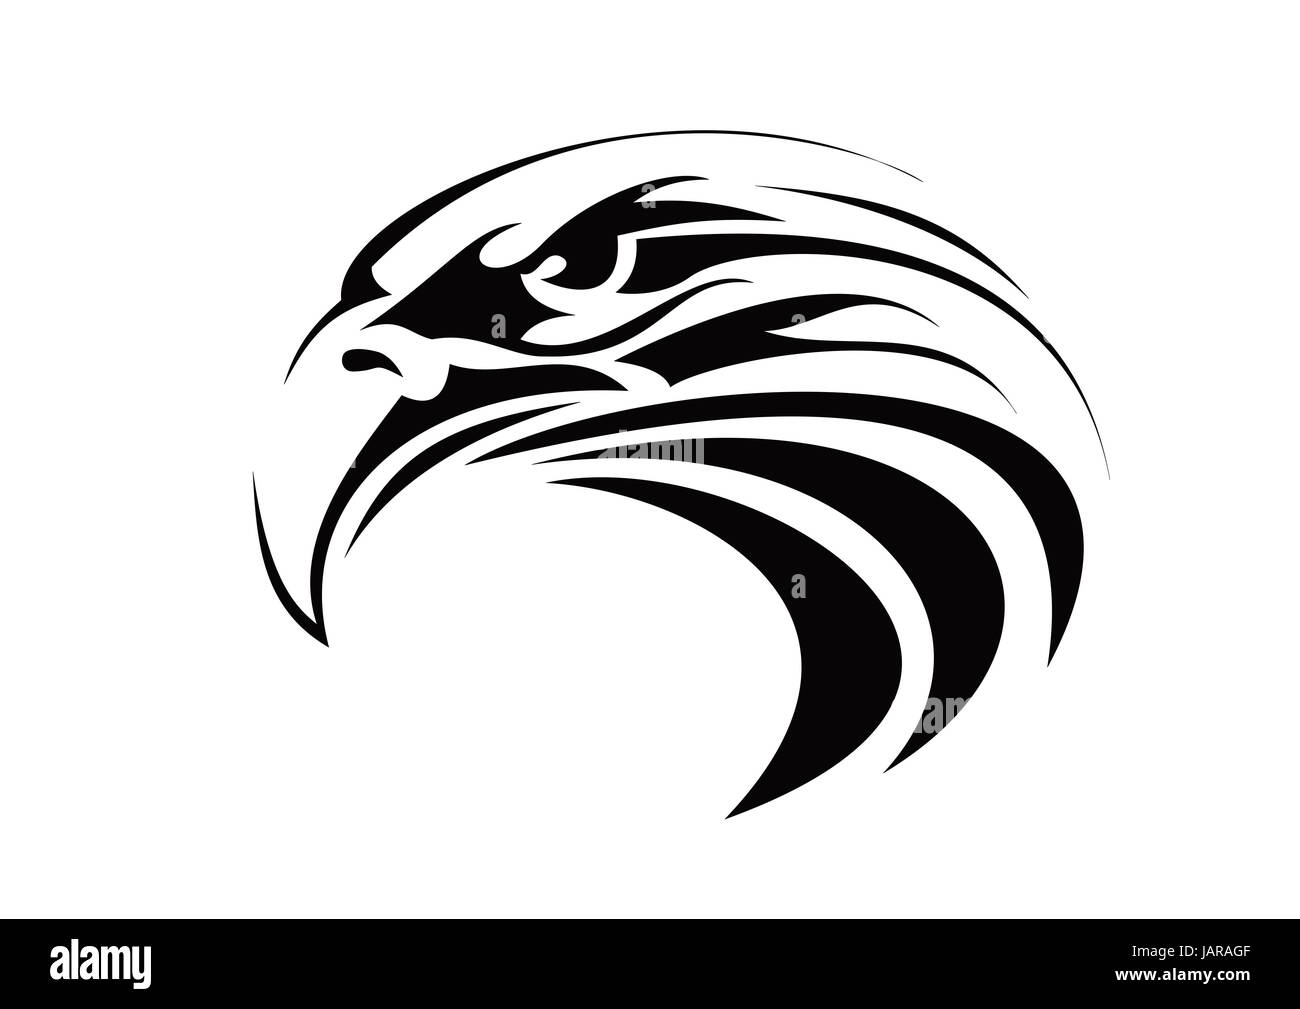 very big size tribal eagle tattoo illustration Stock Photo - Alamy